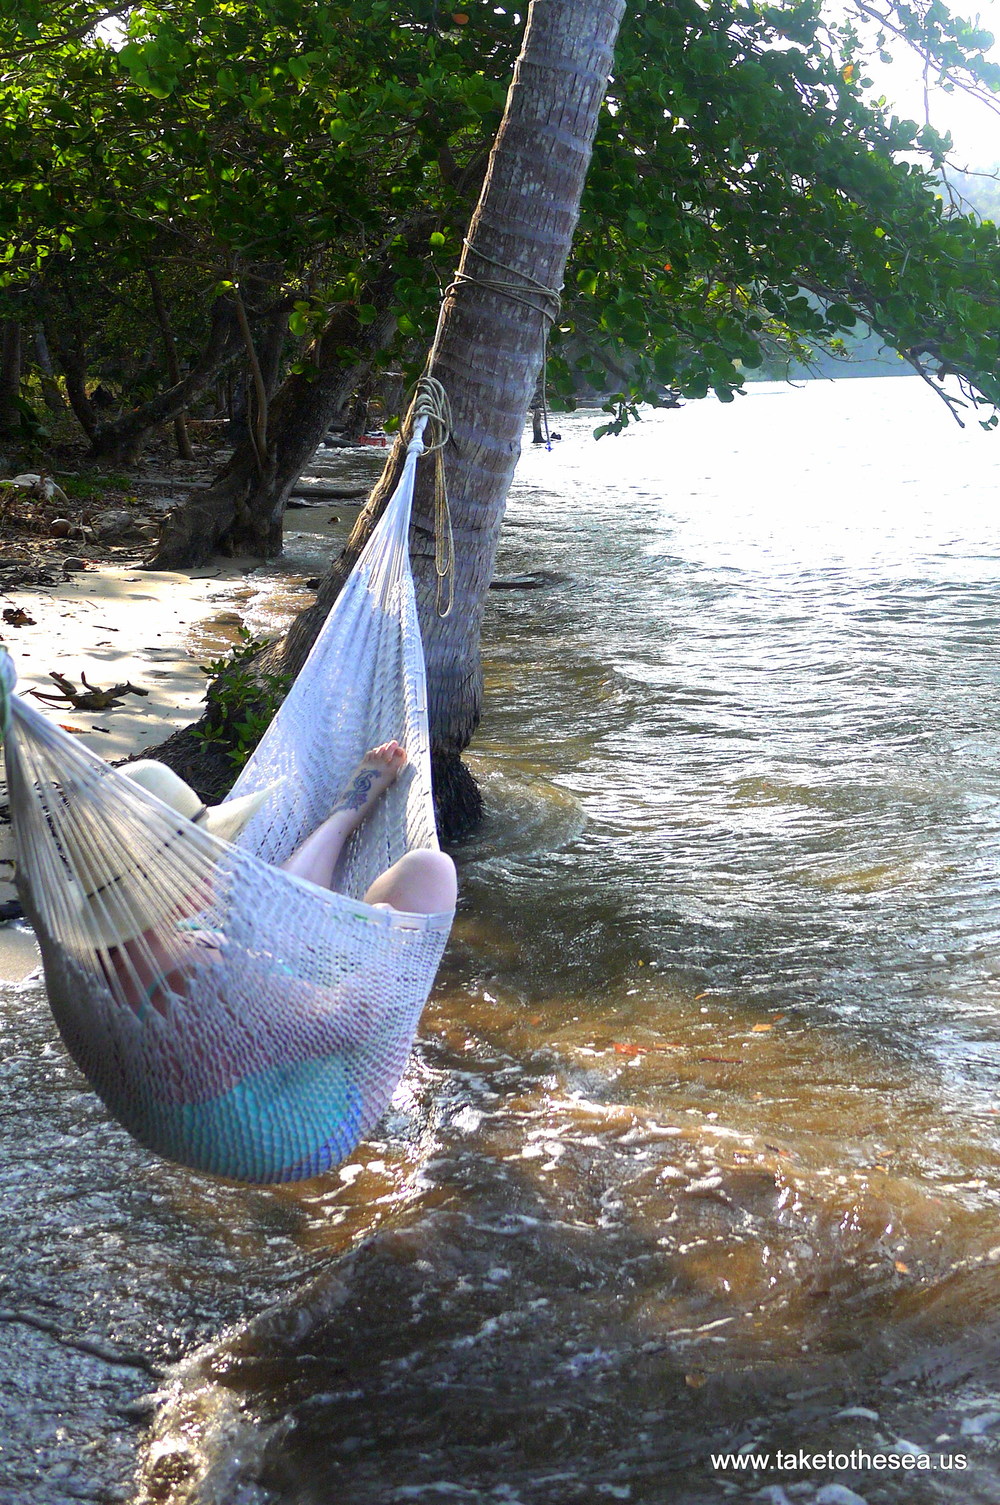 Stephanie and the hammock we left behind on Isla Pedro Gonzalez.